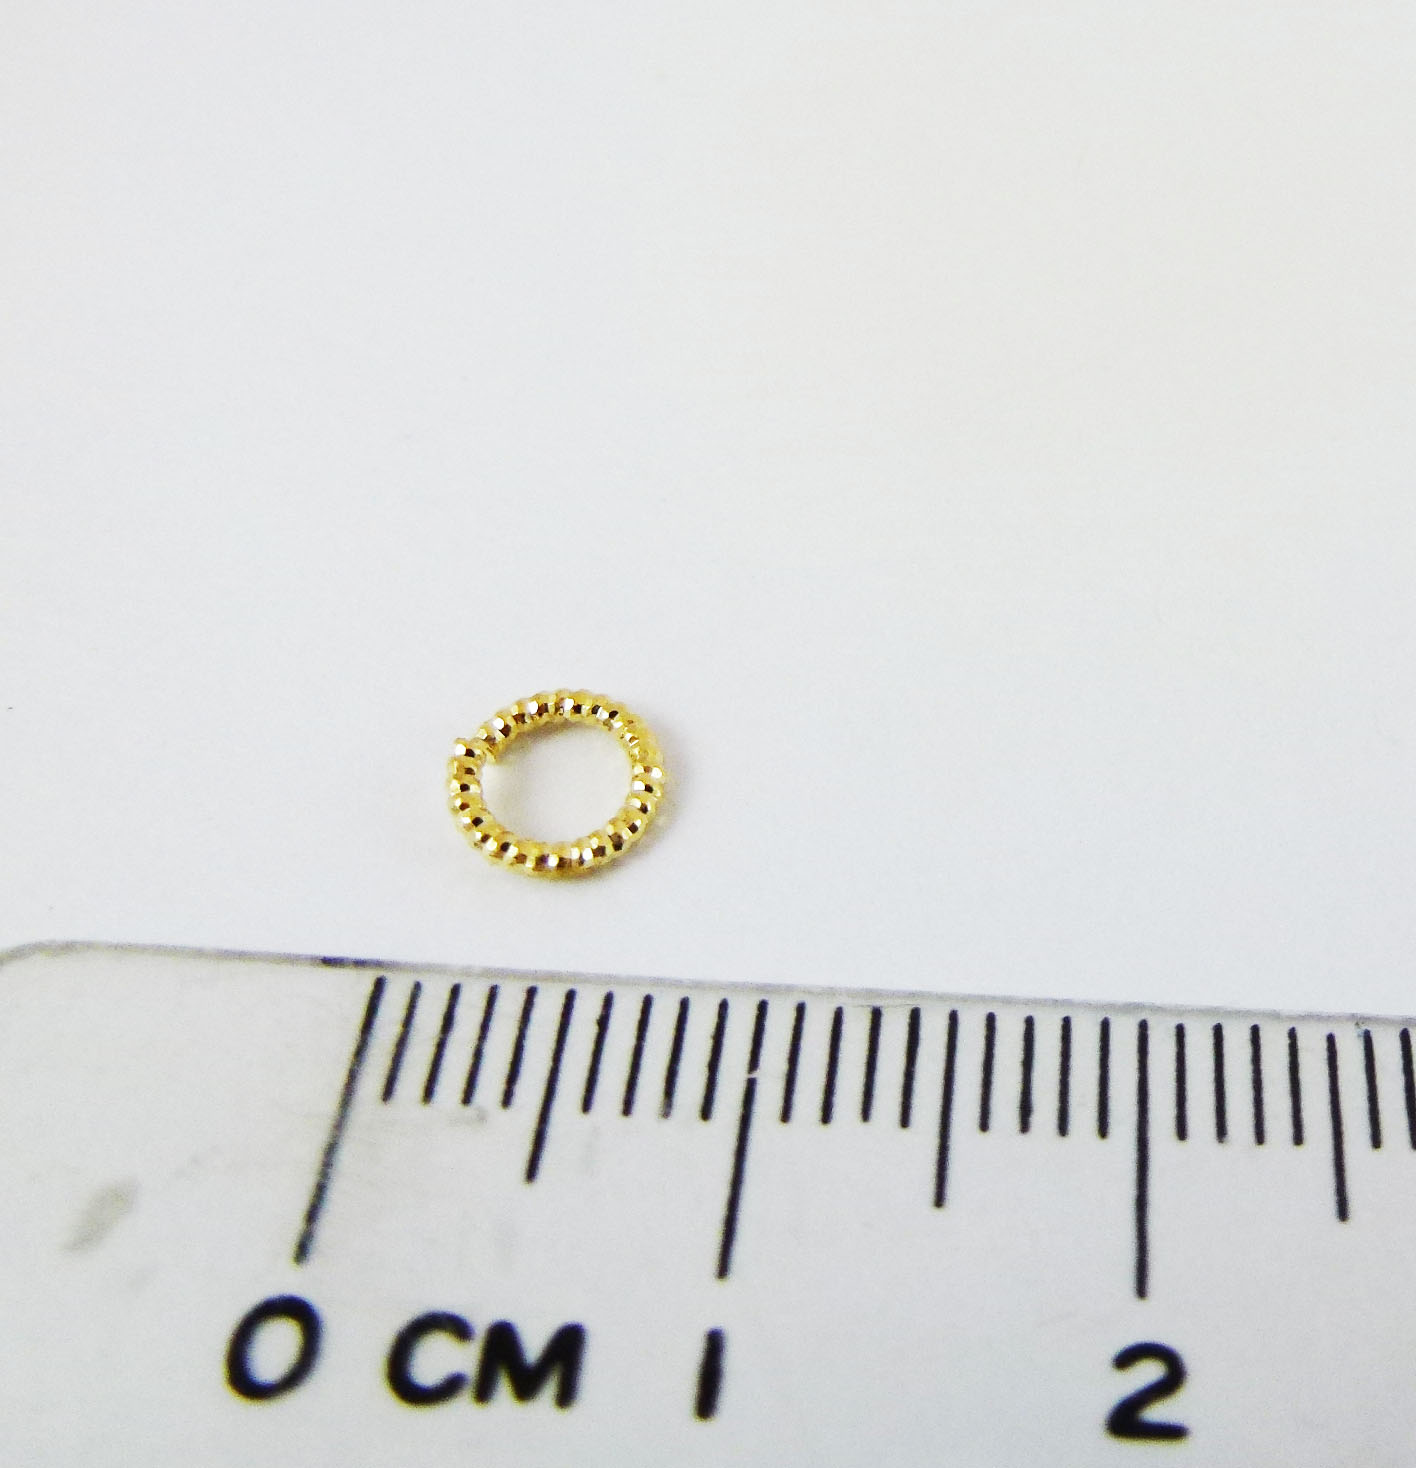 1.0X6mm銅鍍金色雷射雕刻單圈